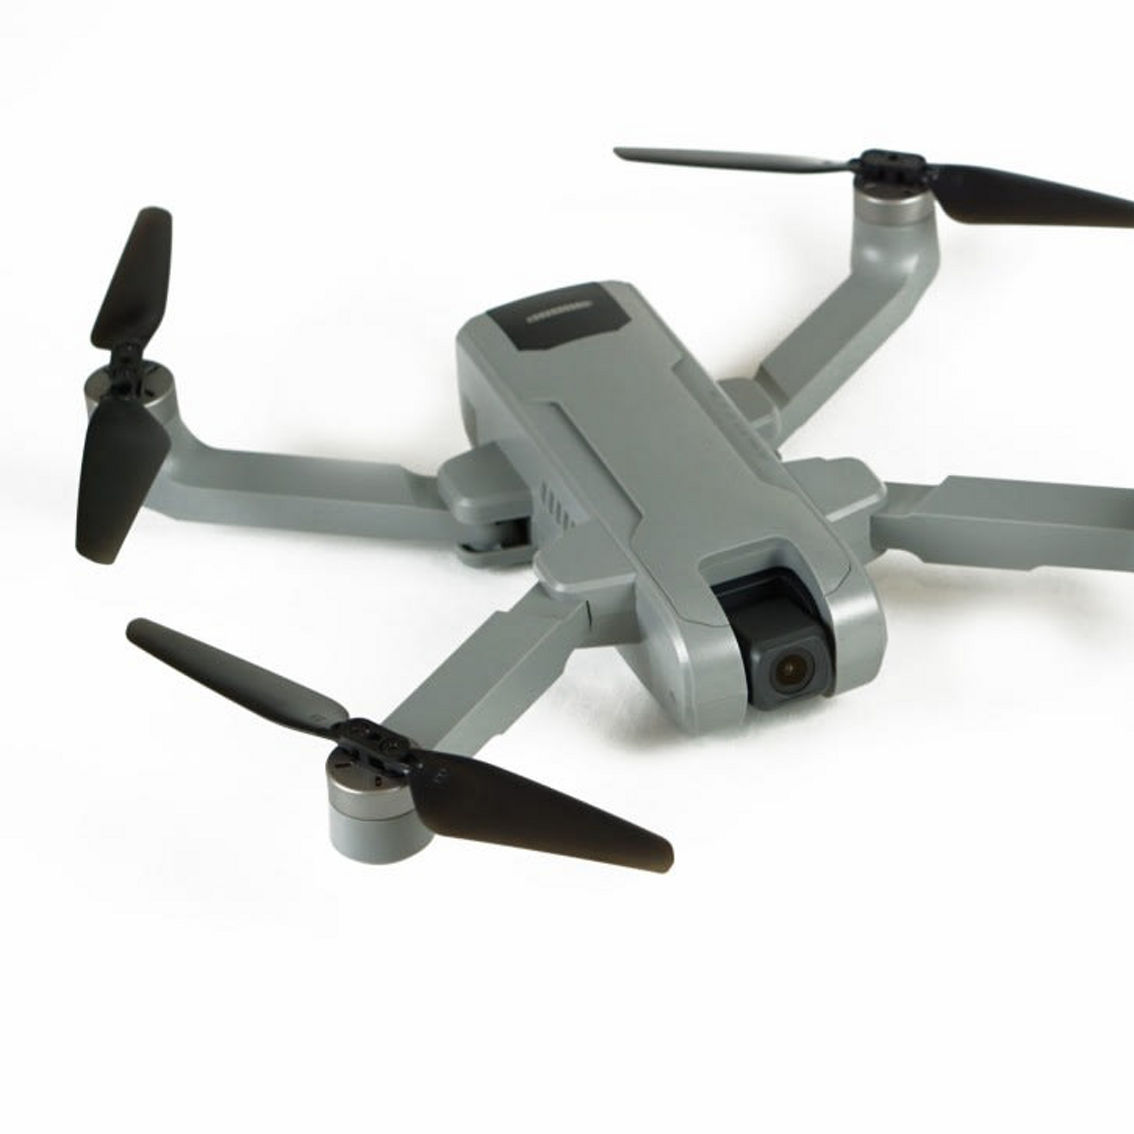 CIS-V6 medium size GPS foldable drone with 2.7k camera - Image 3 of 5